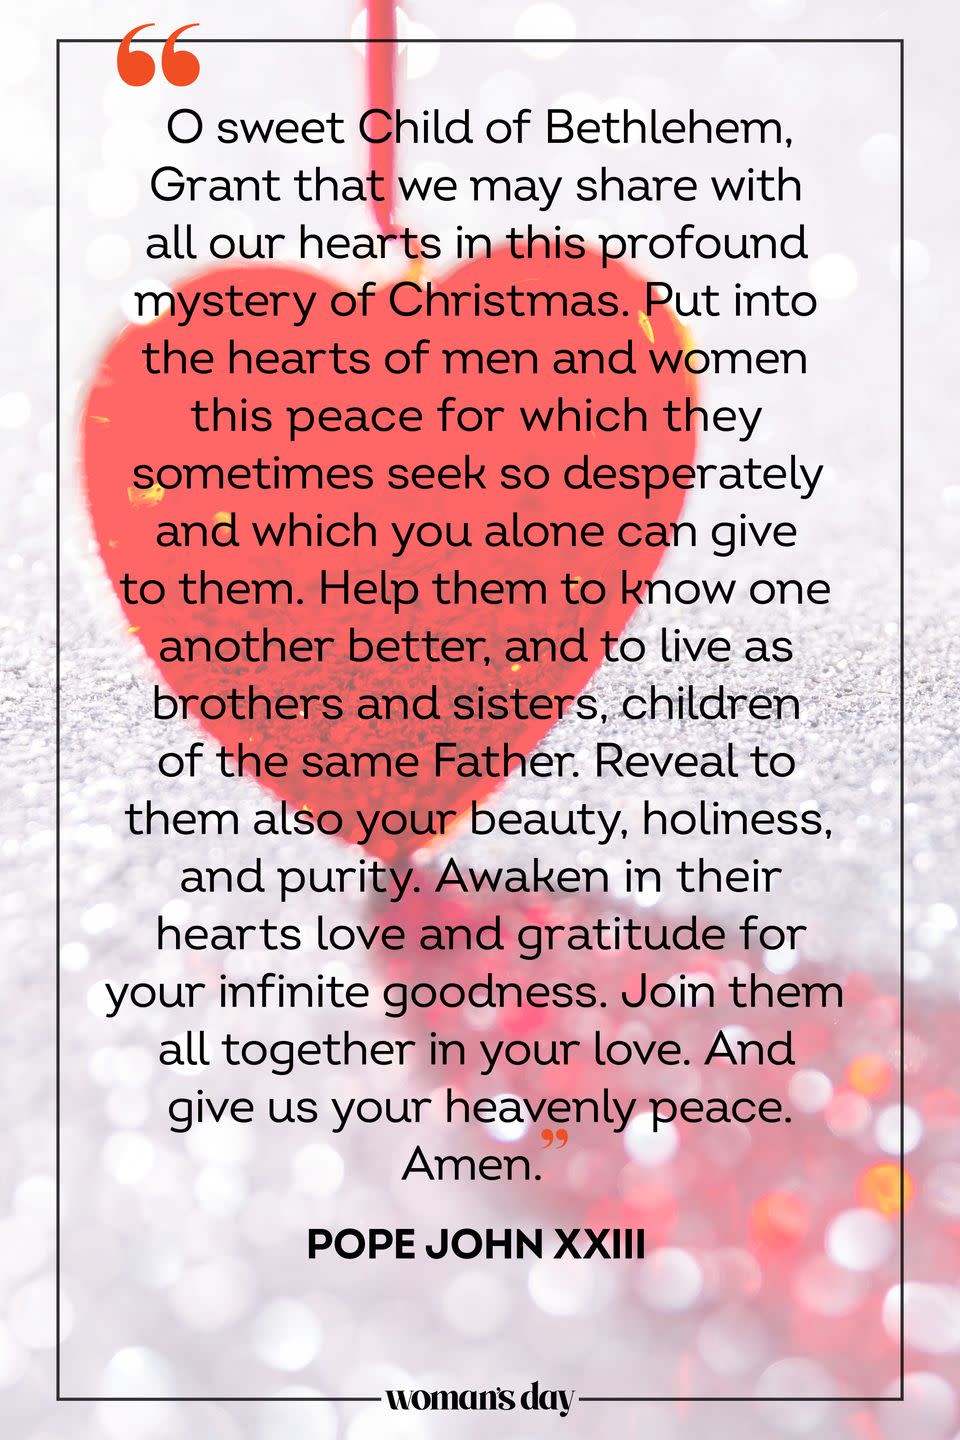 15) A Christmas Prayer About God's Love